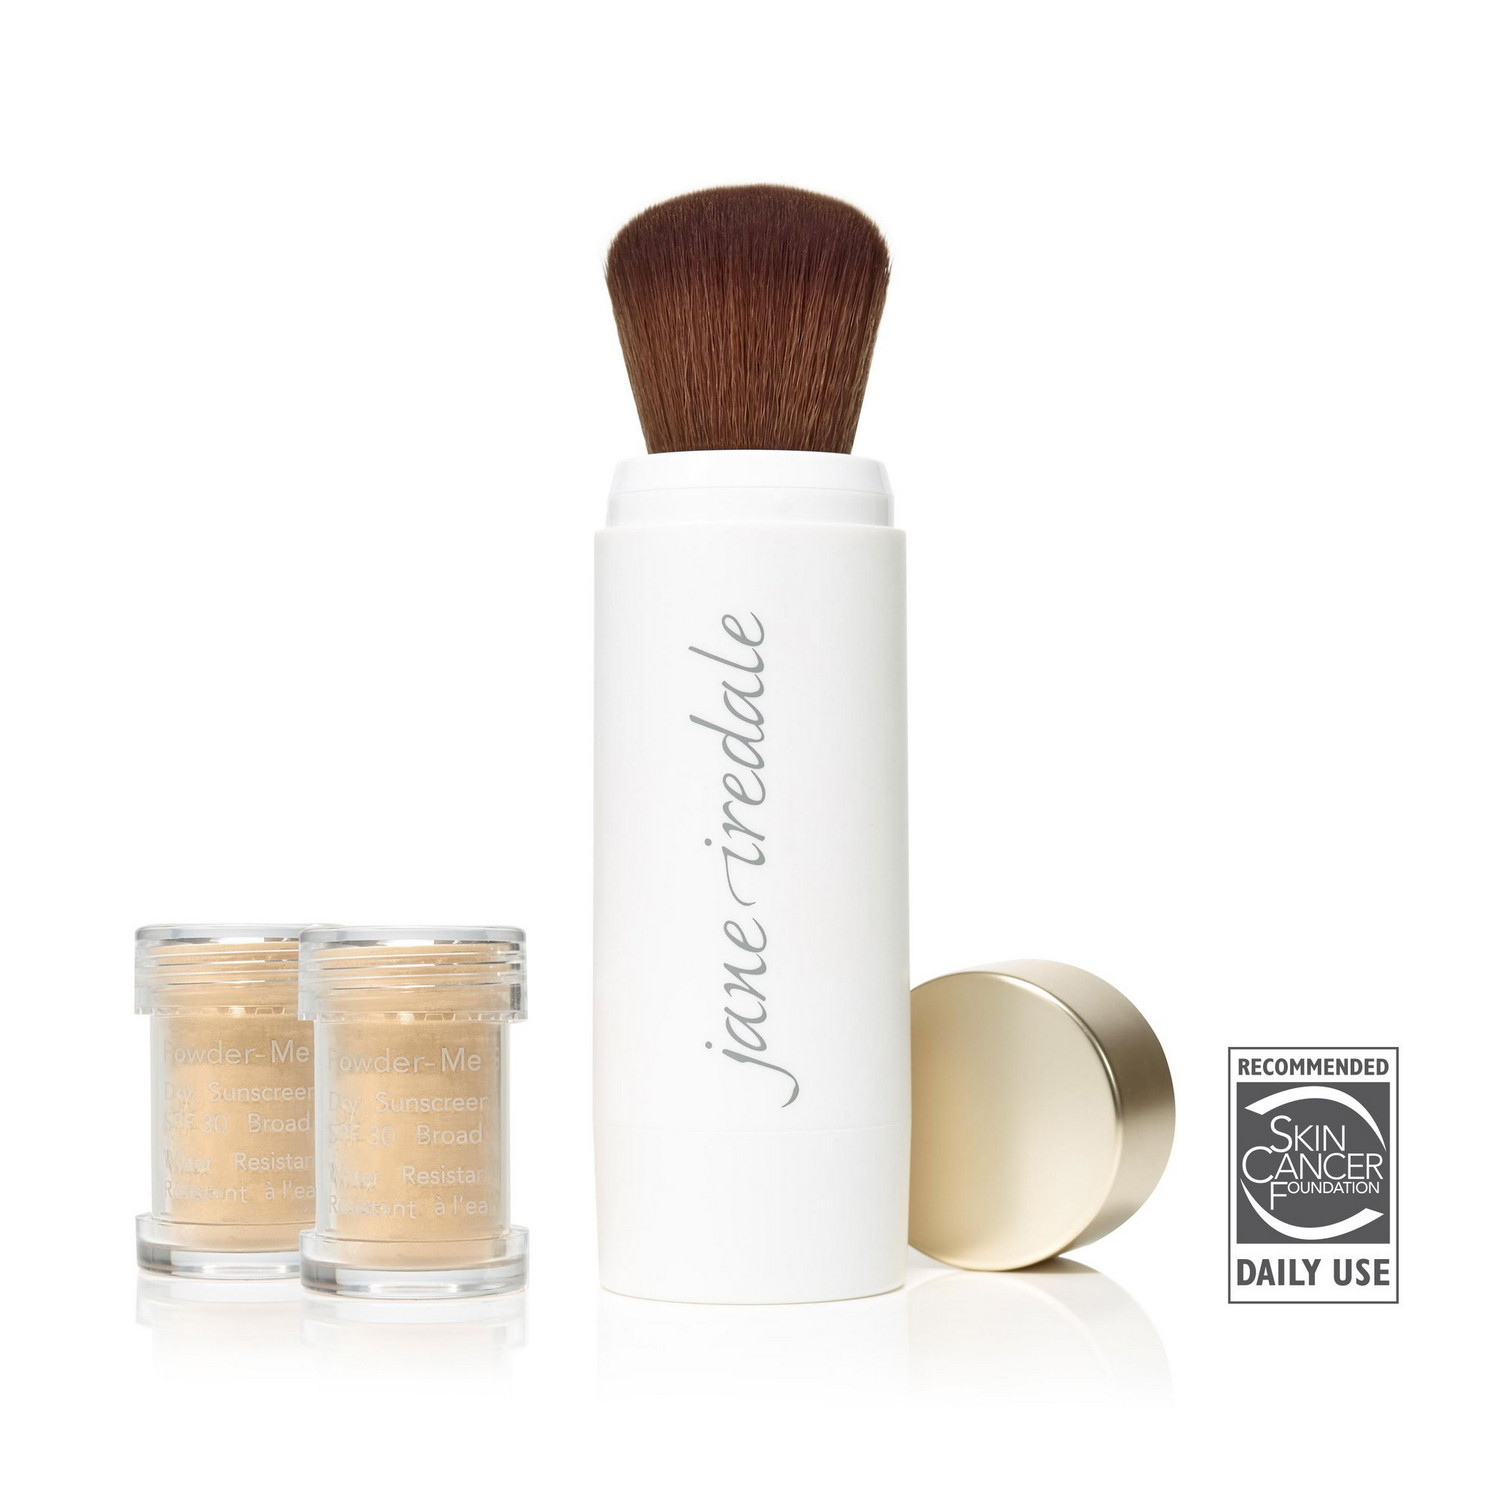 Powder-Me® SPF 30 Refillable Brush Dry Sunscreen